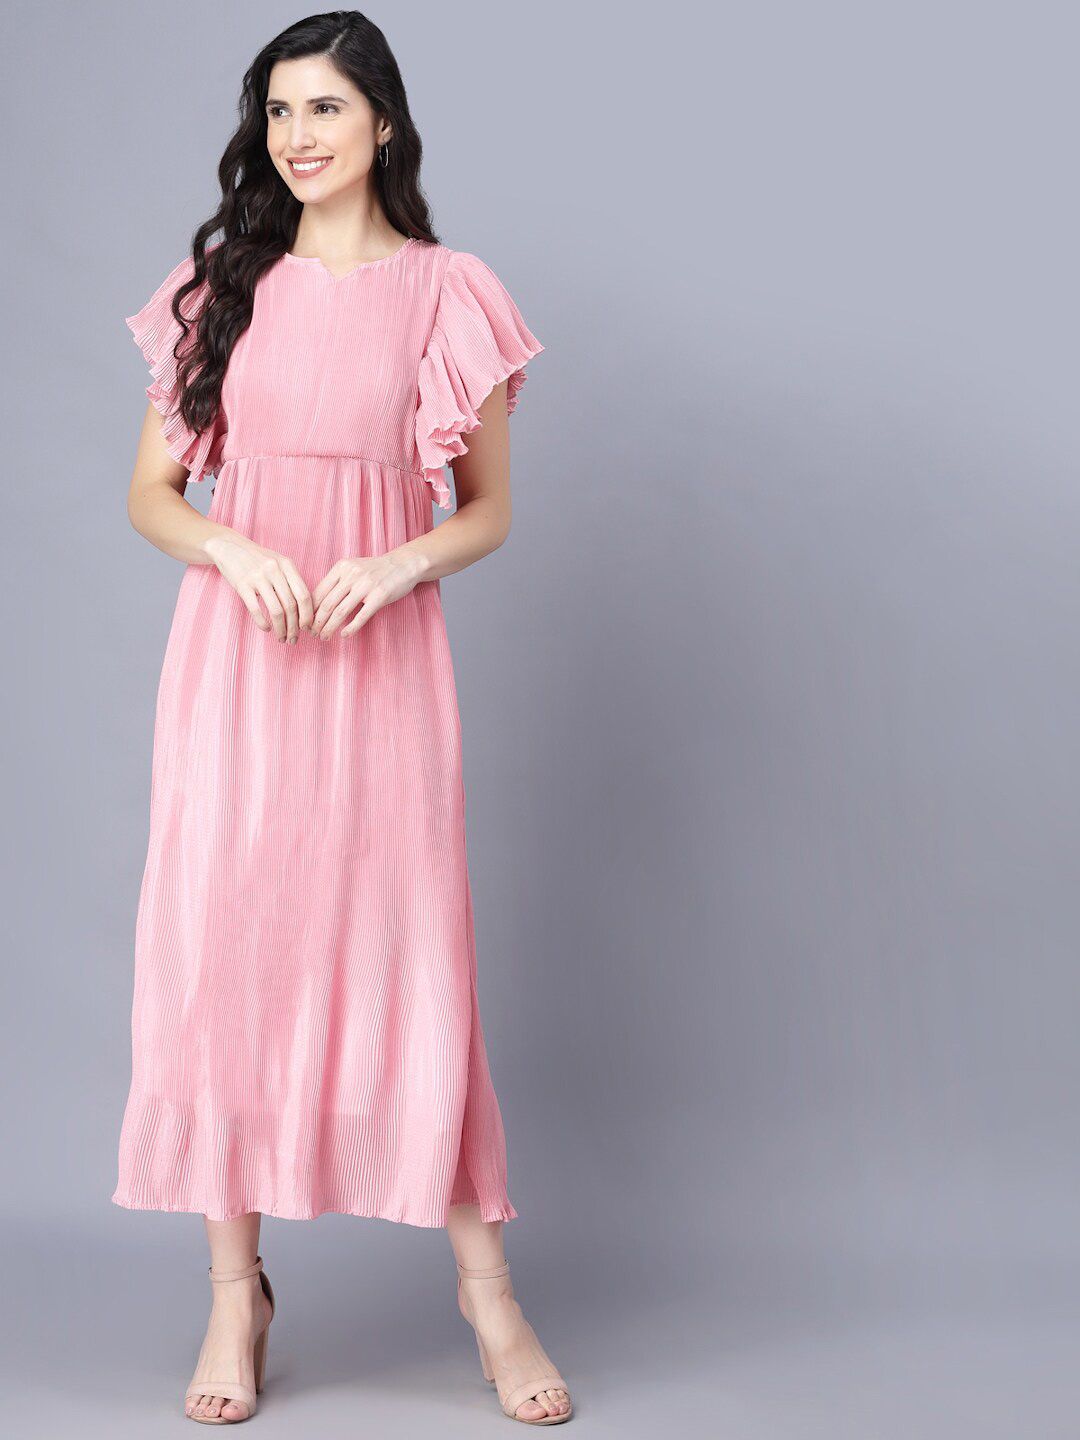 Myshka Pink Chiffon Midi Dress Price in India